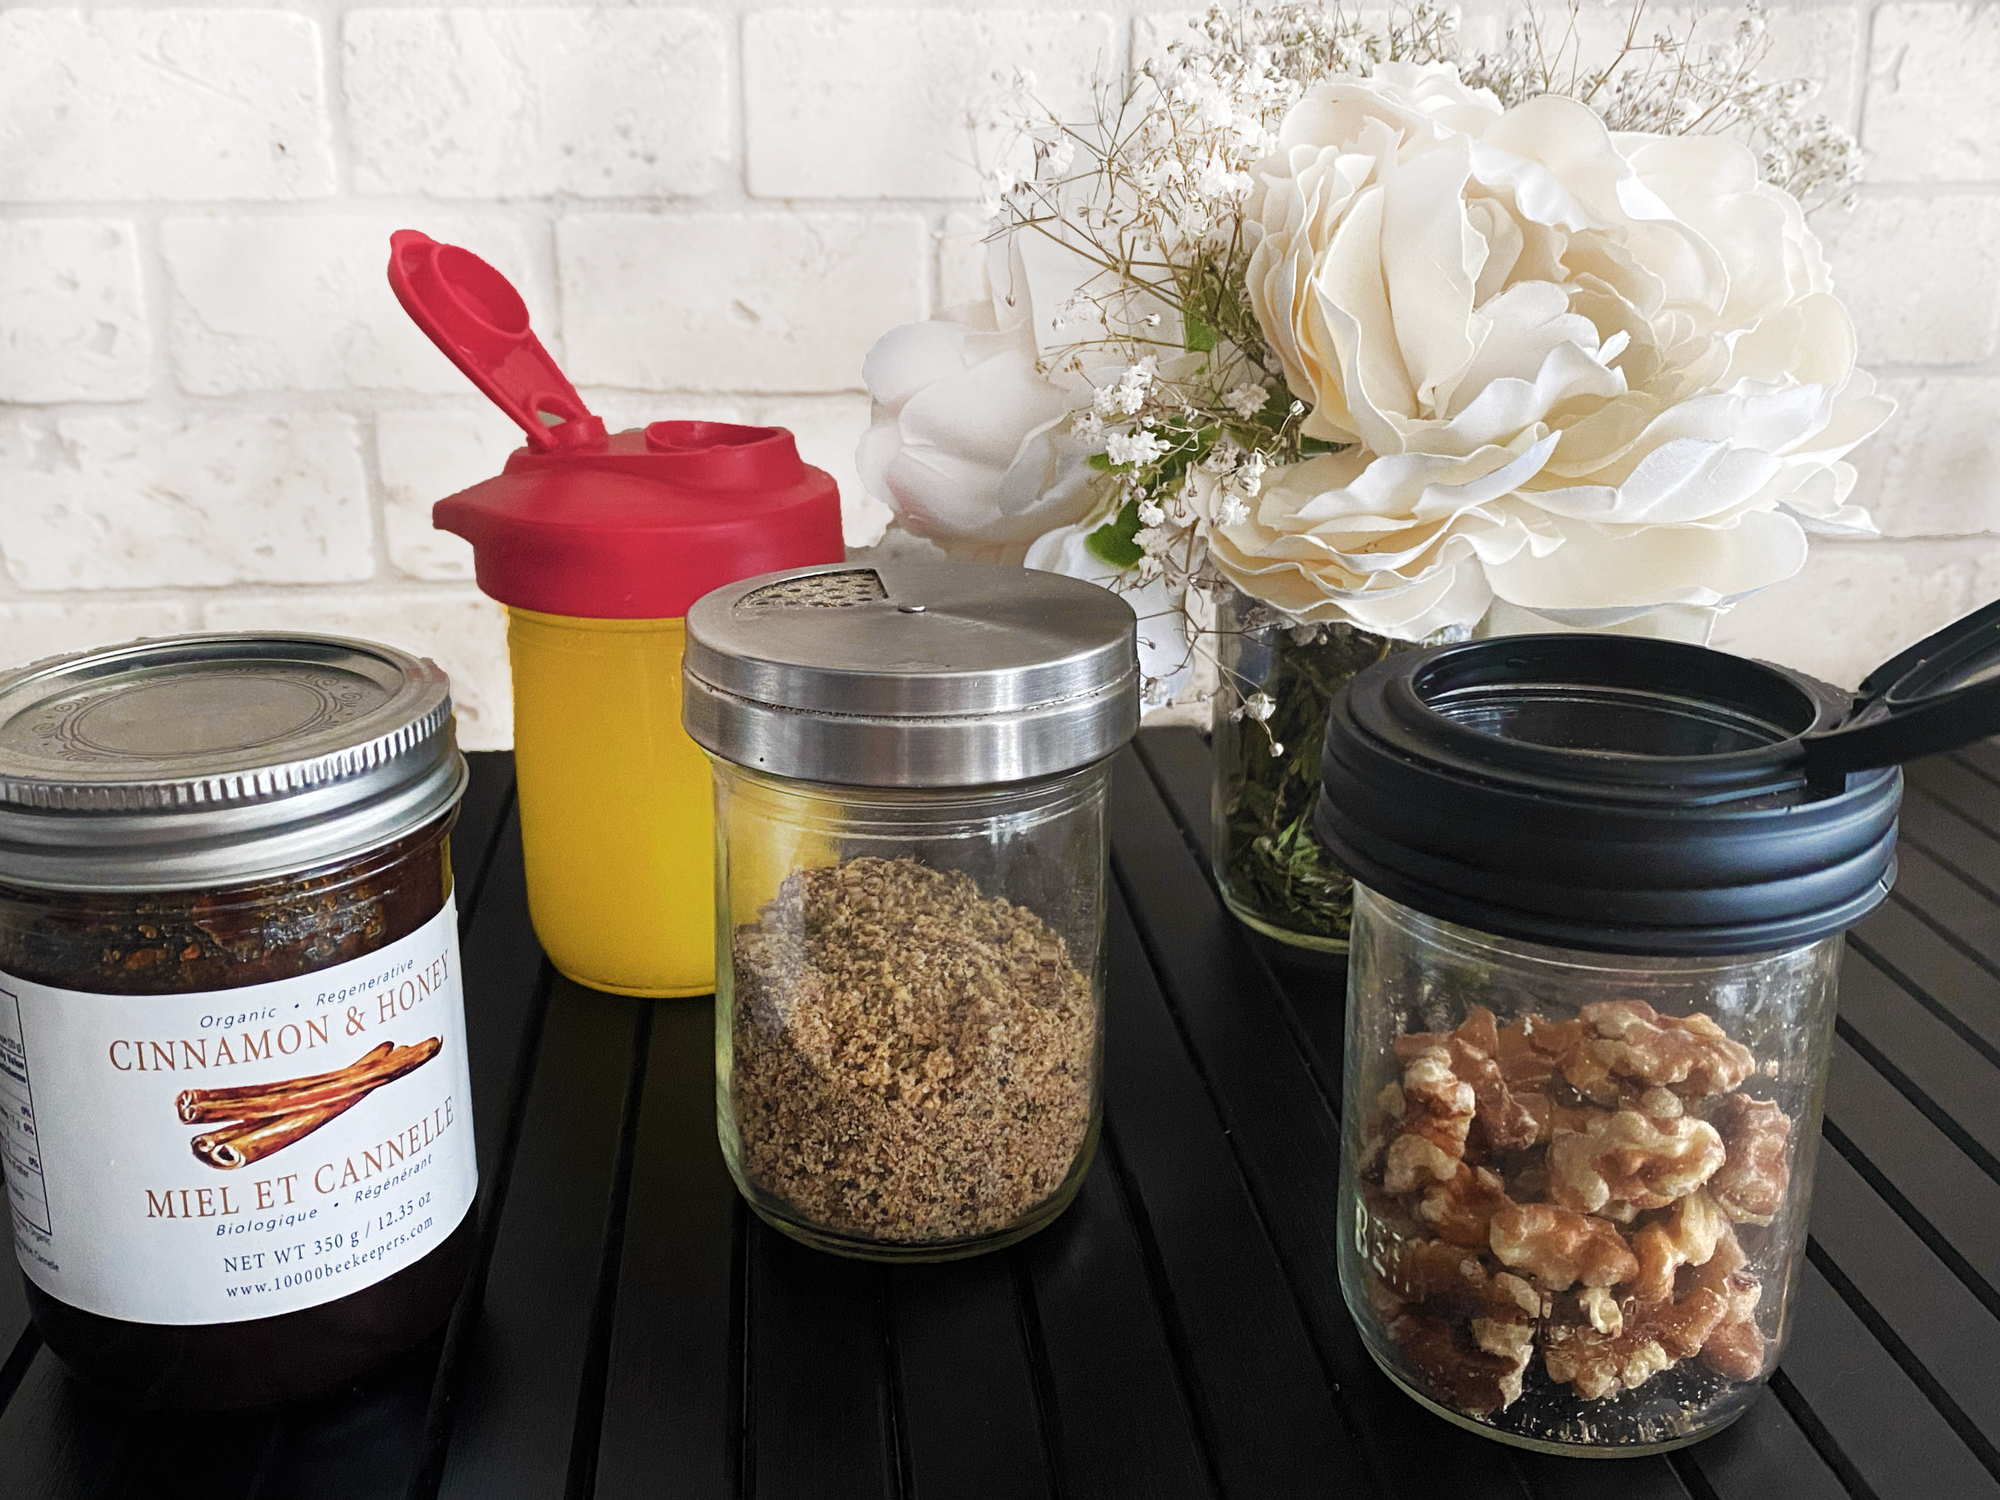 Creative ways to reuse your mason jars. DIY with mason jars